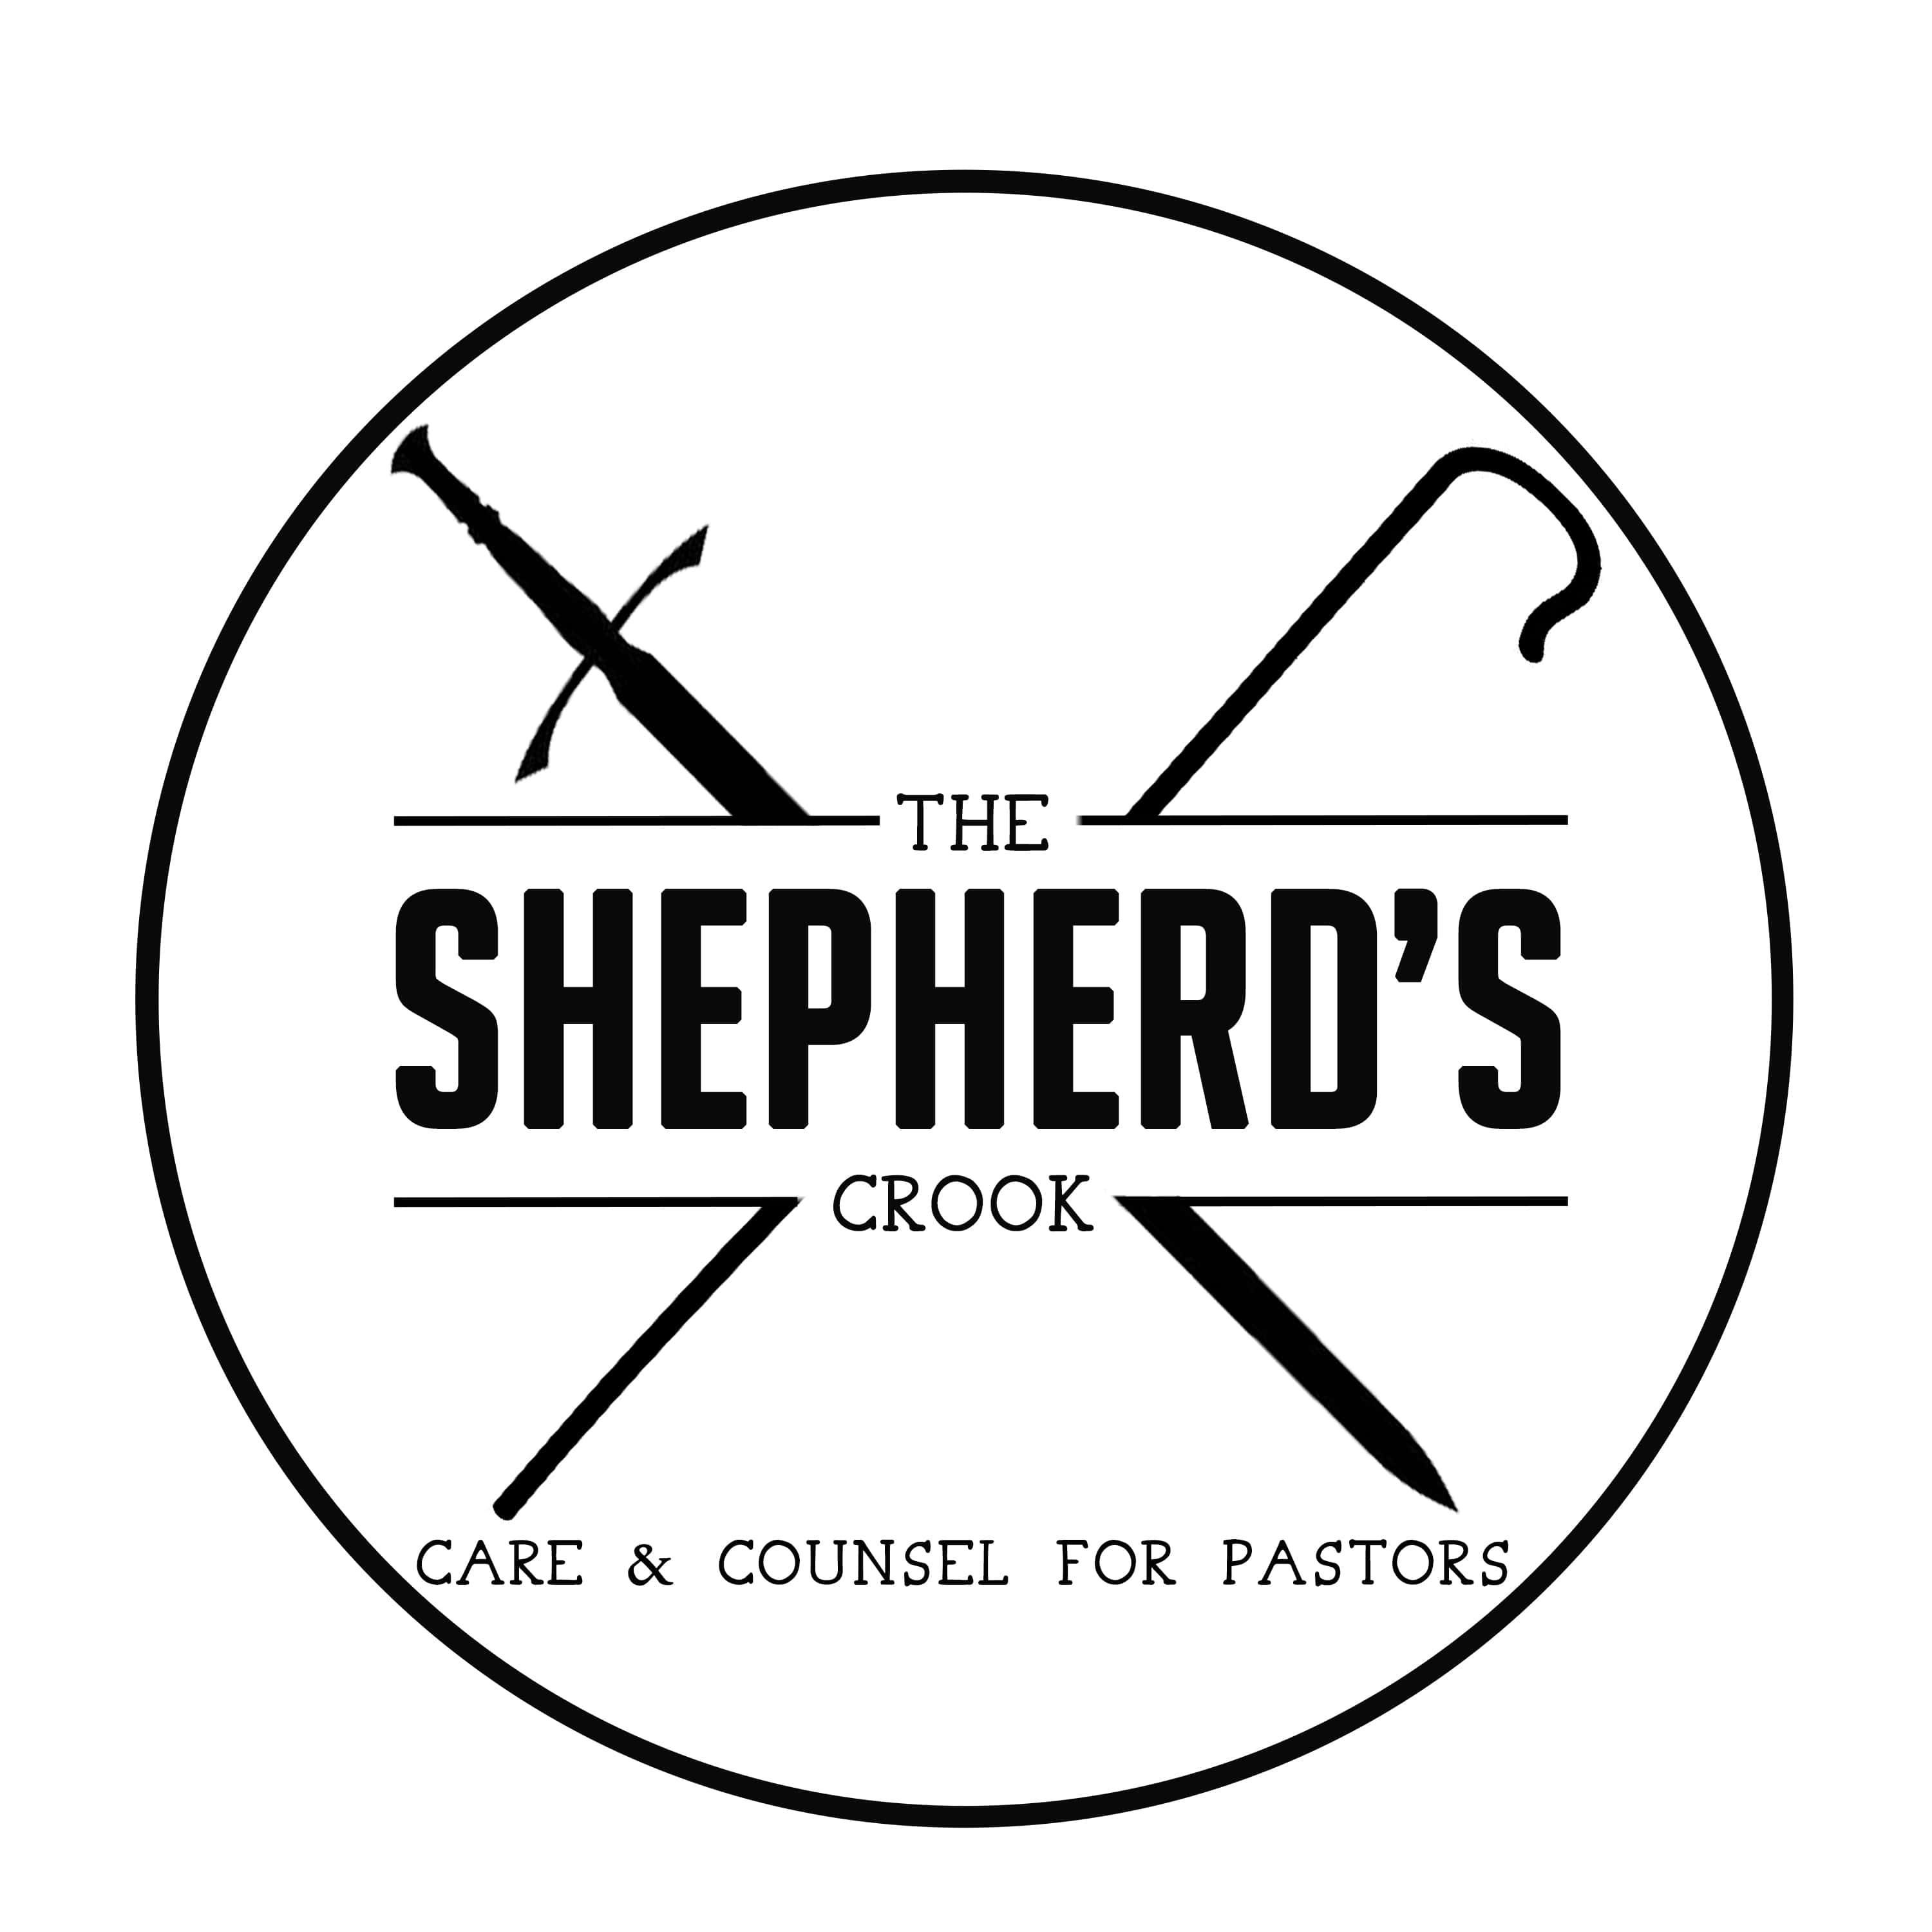 The Shepherd’s Crook